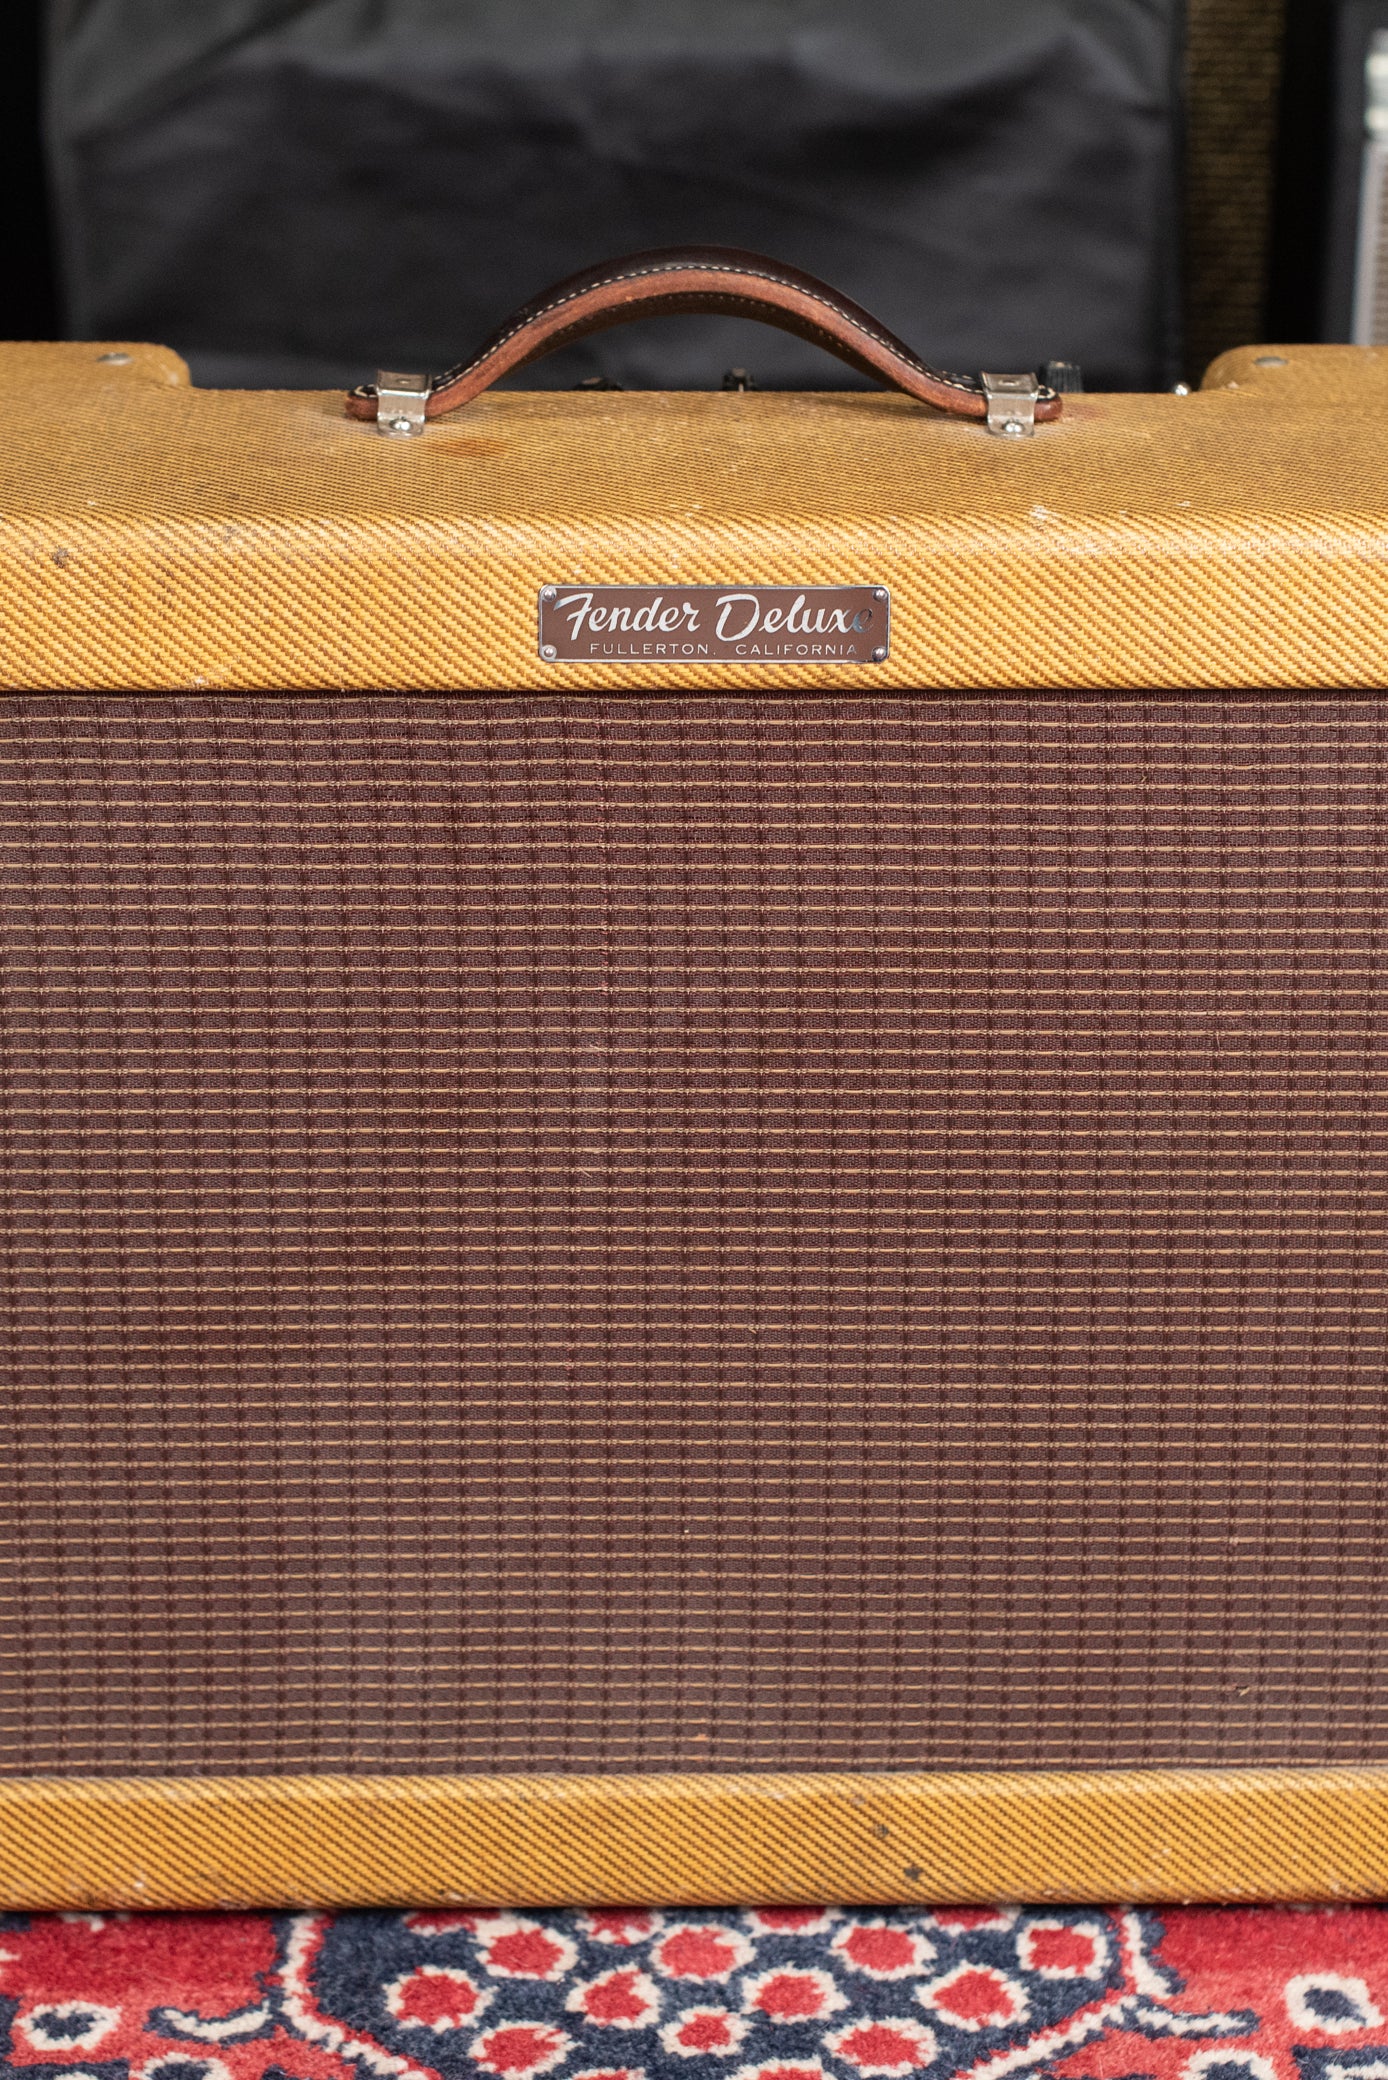 1959 Fender Deluxe Amp Tweed Narrow Panel 5E3